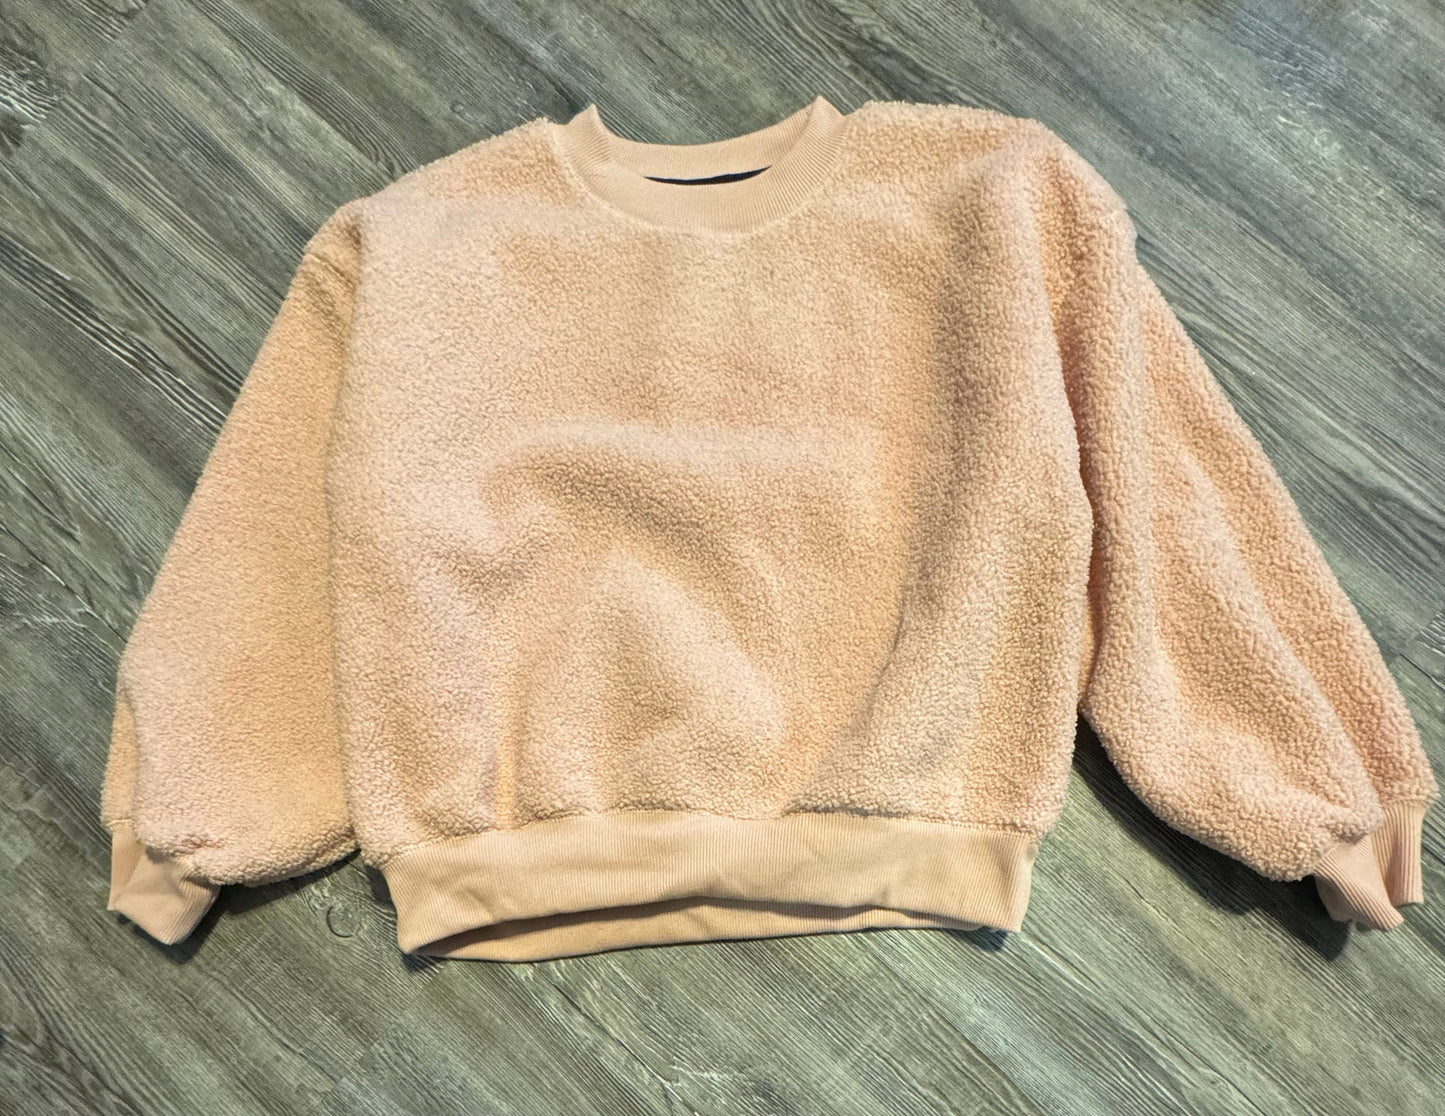 Athletic Sweatshirt Crewneck By Clothes Mentor  Size: S